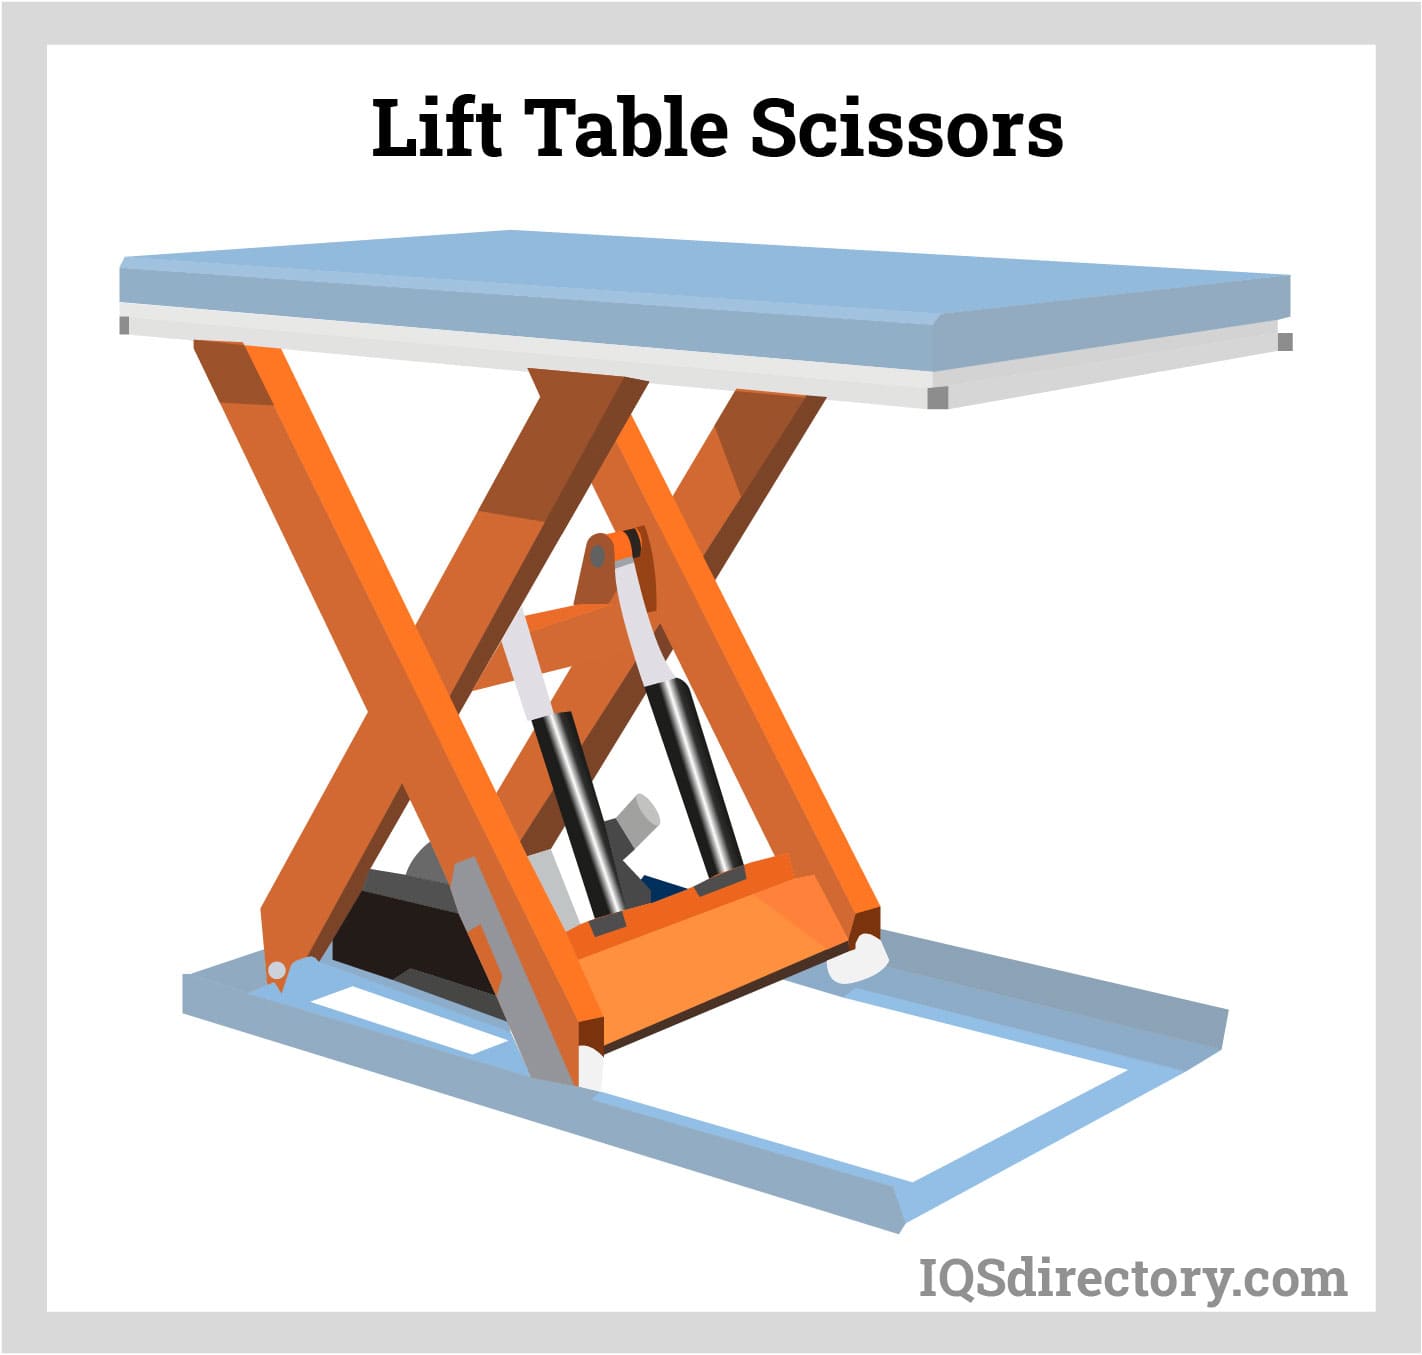 Lift Table Scissors